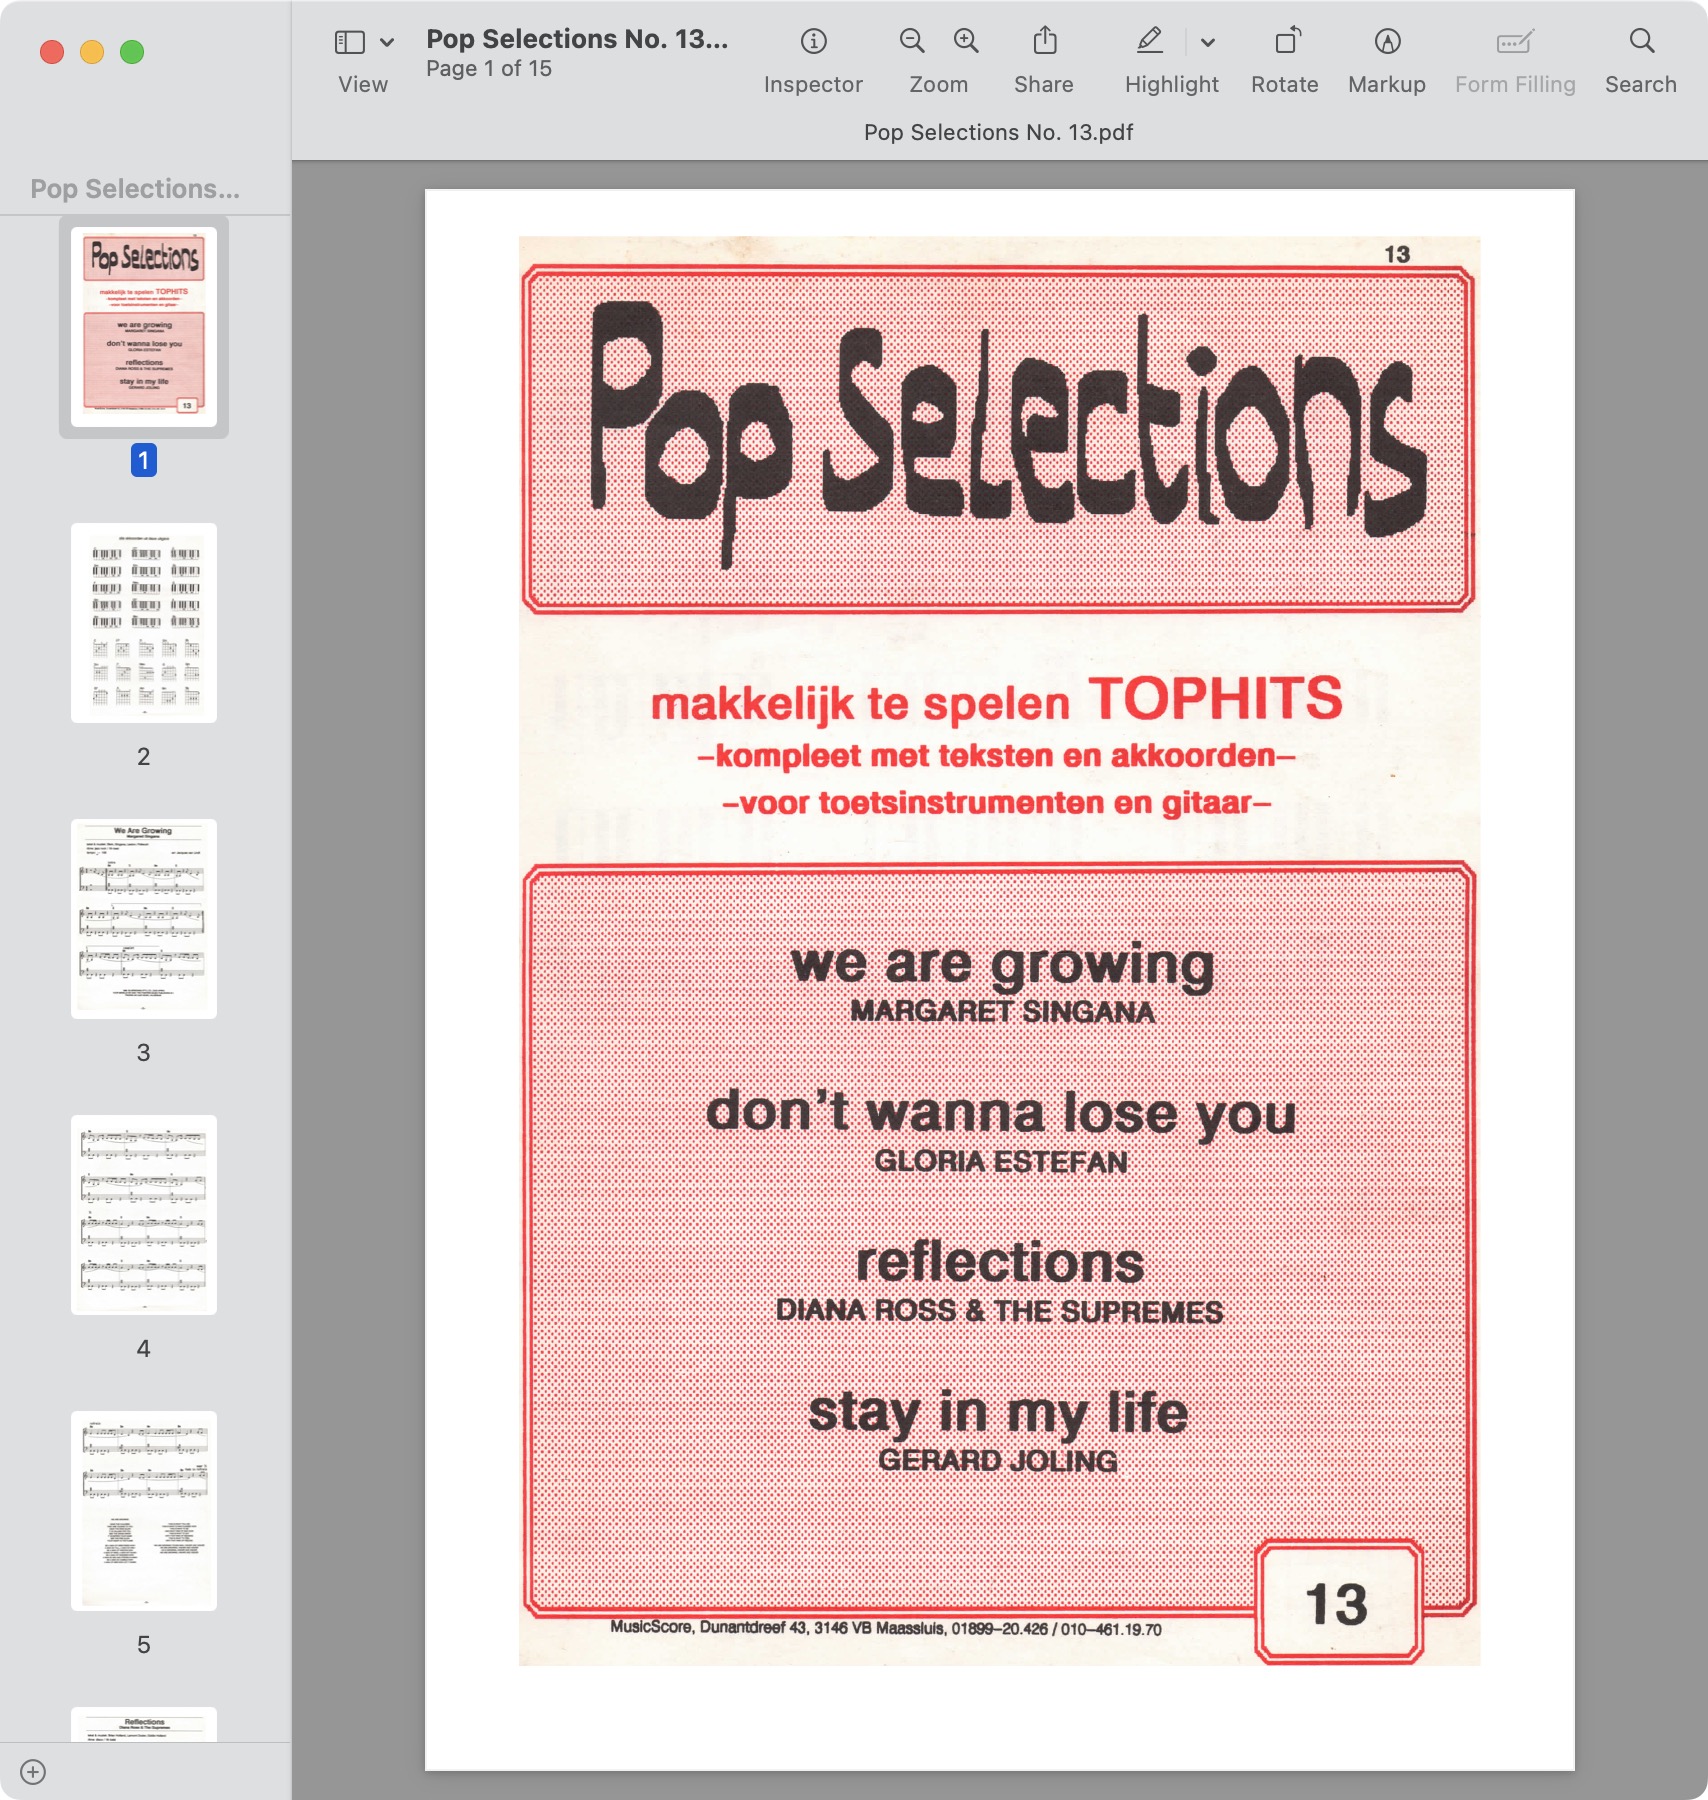 Pop Selections No. 13.jpg